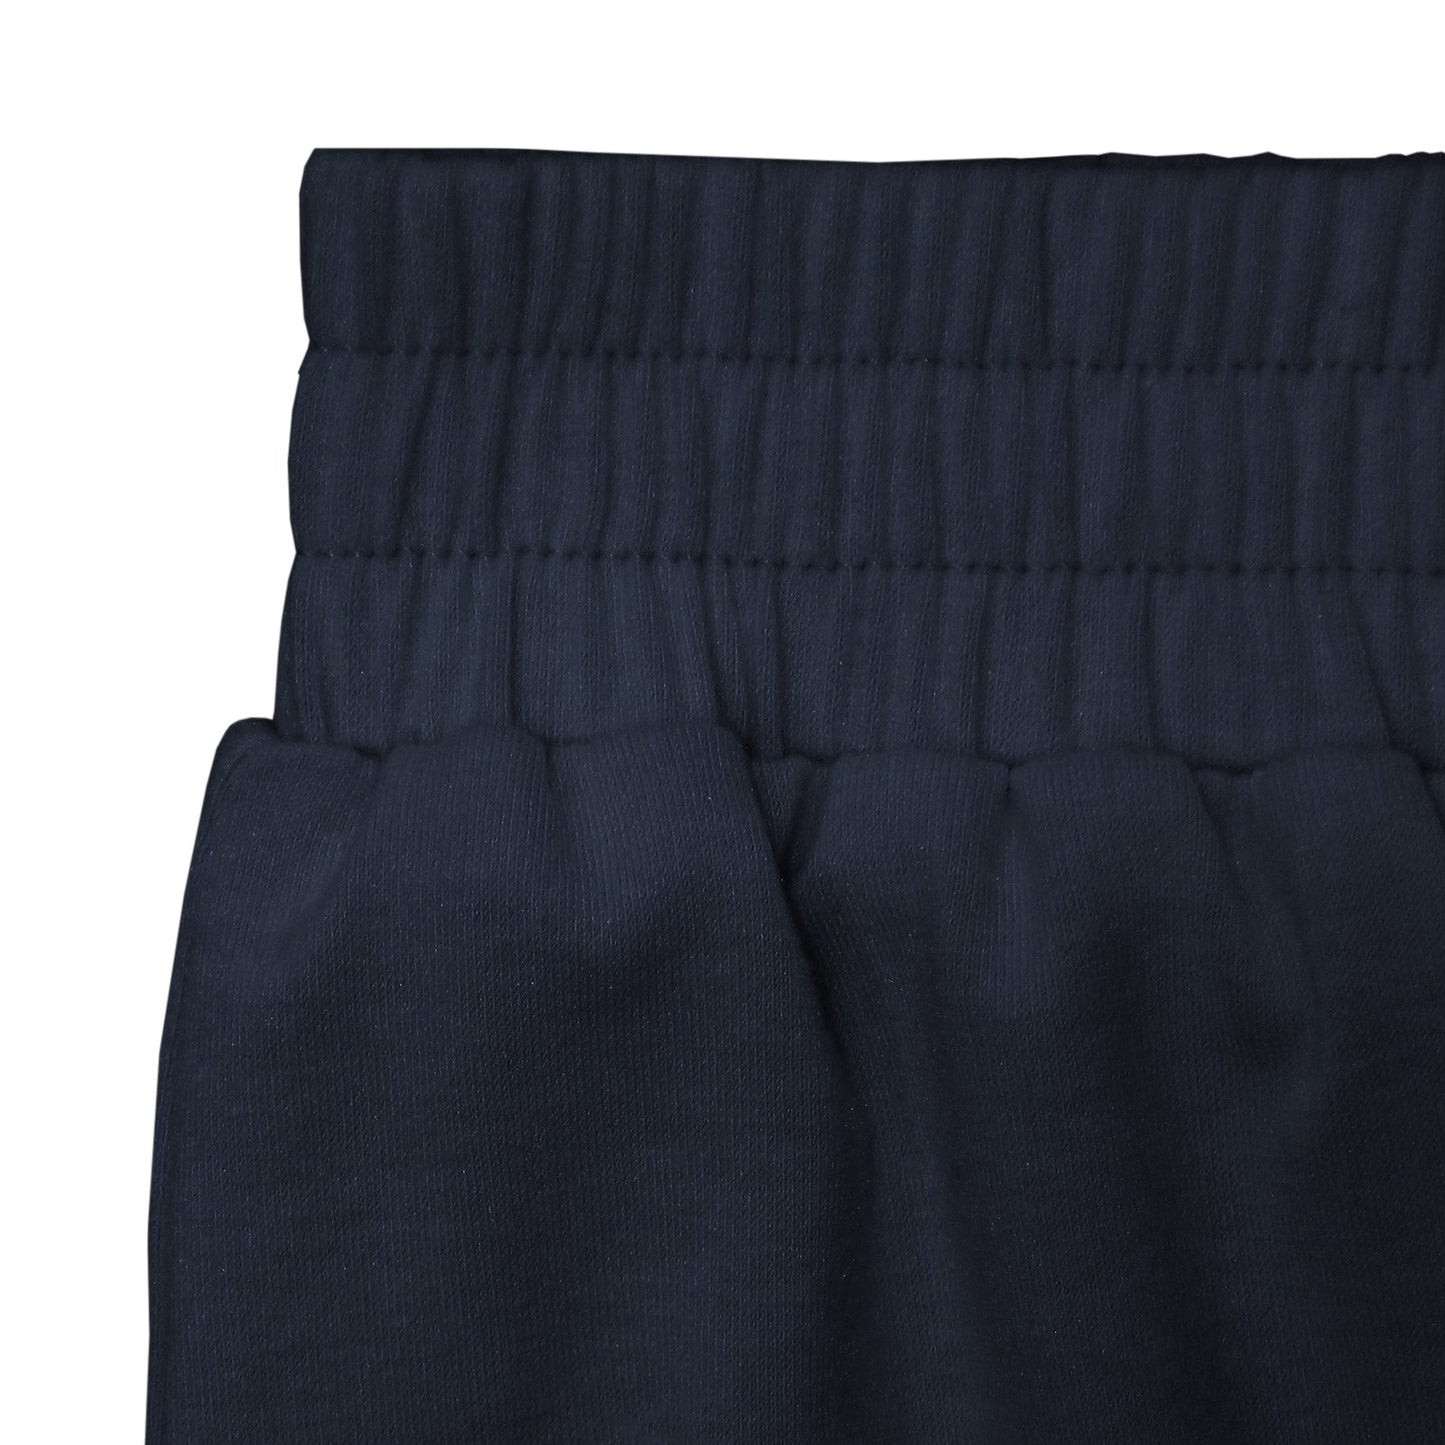 Casual Side Split Women Summer Pants-Pants-Black-S-Free Shipping Leatheretro